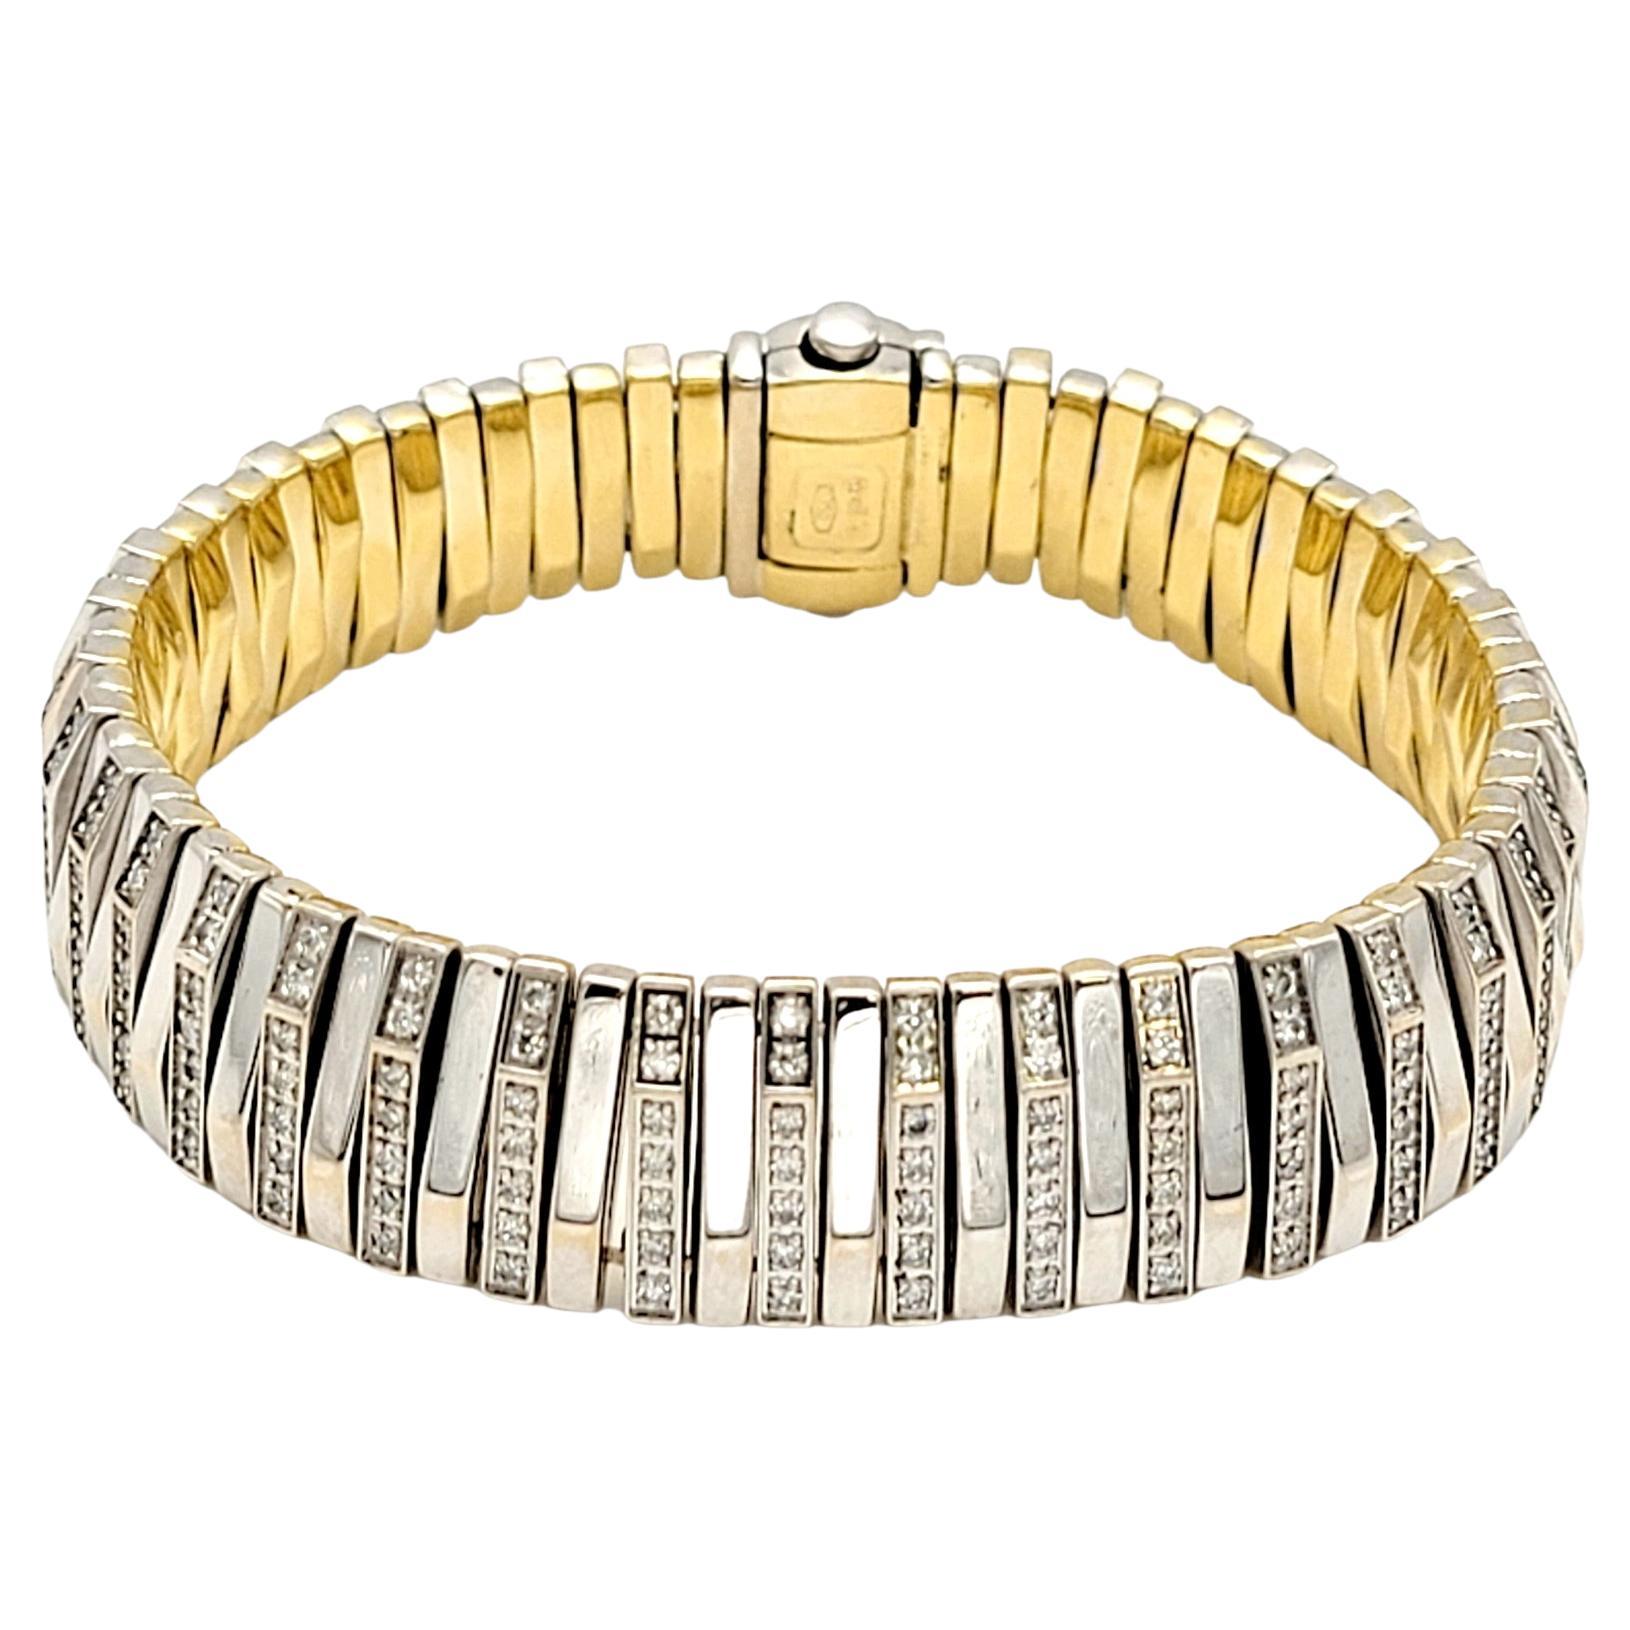 Chimento 18 Karat White and Yellow Gold Diamond Bar Link Bracelet 2.52 Carats